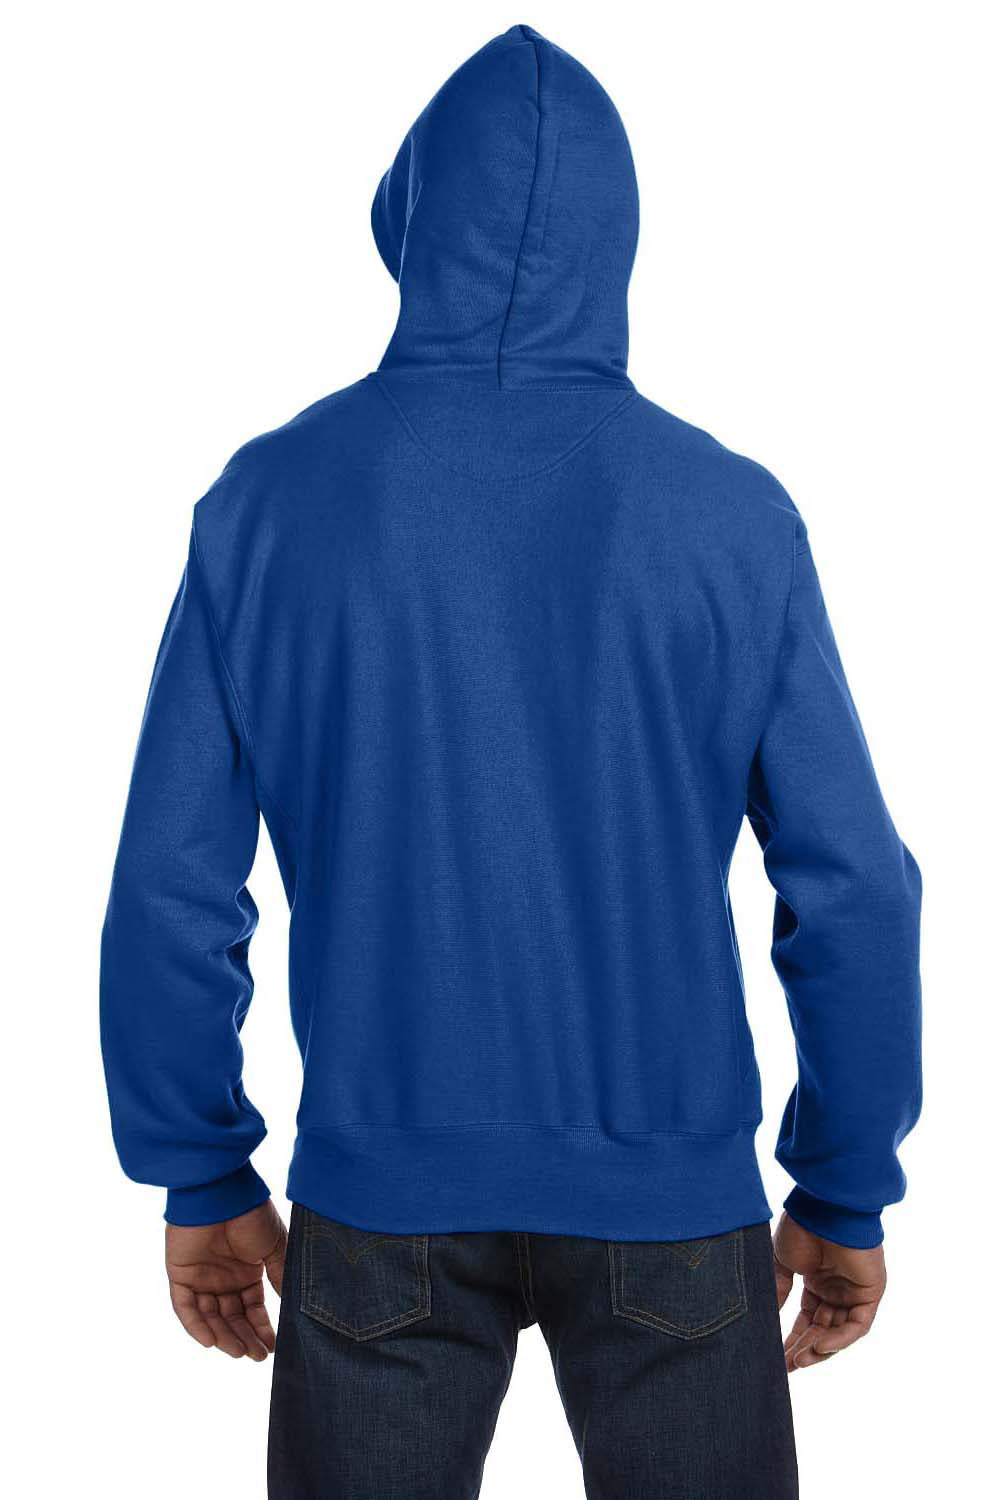 Champion S1051 Mens Hooded Sweatshirt Hoodie Royal Blue Back